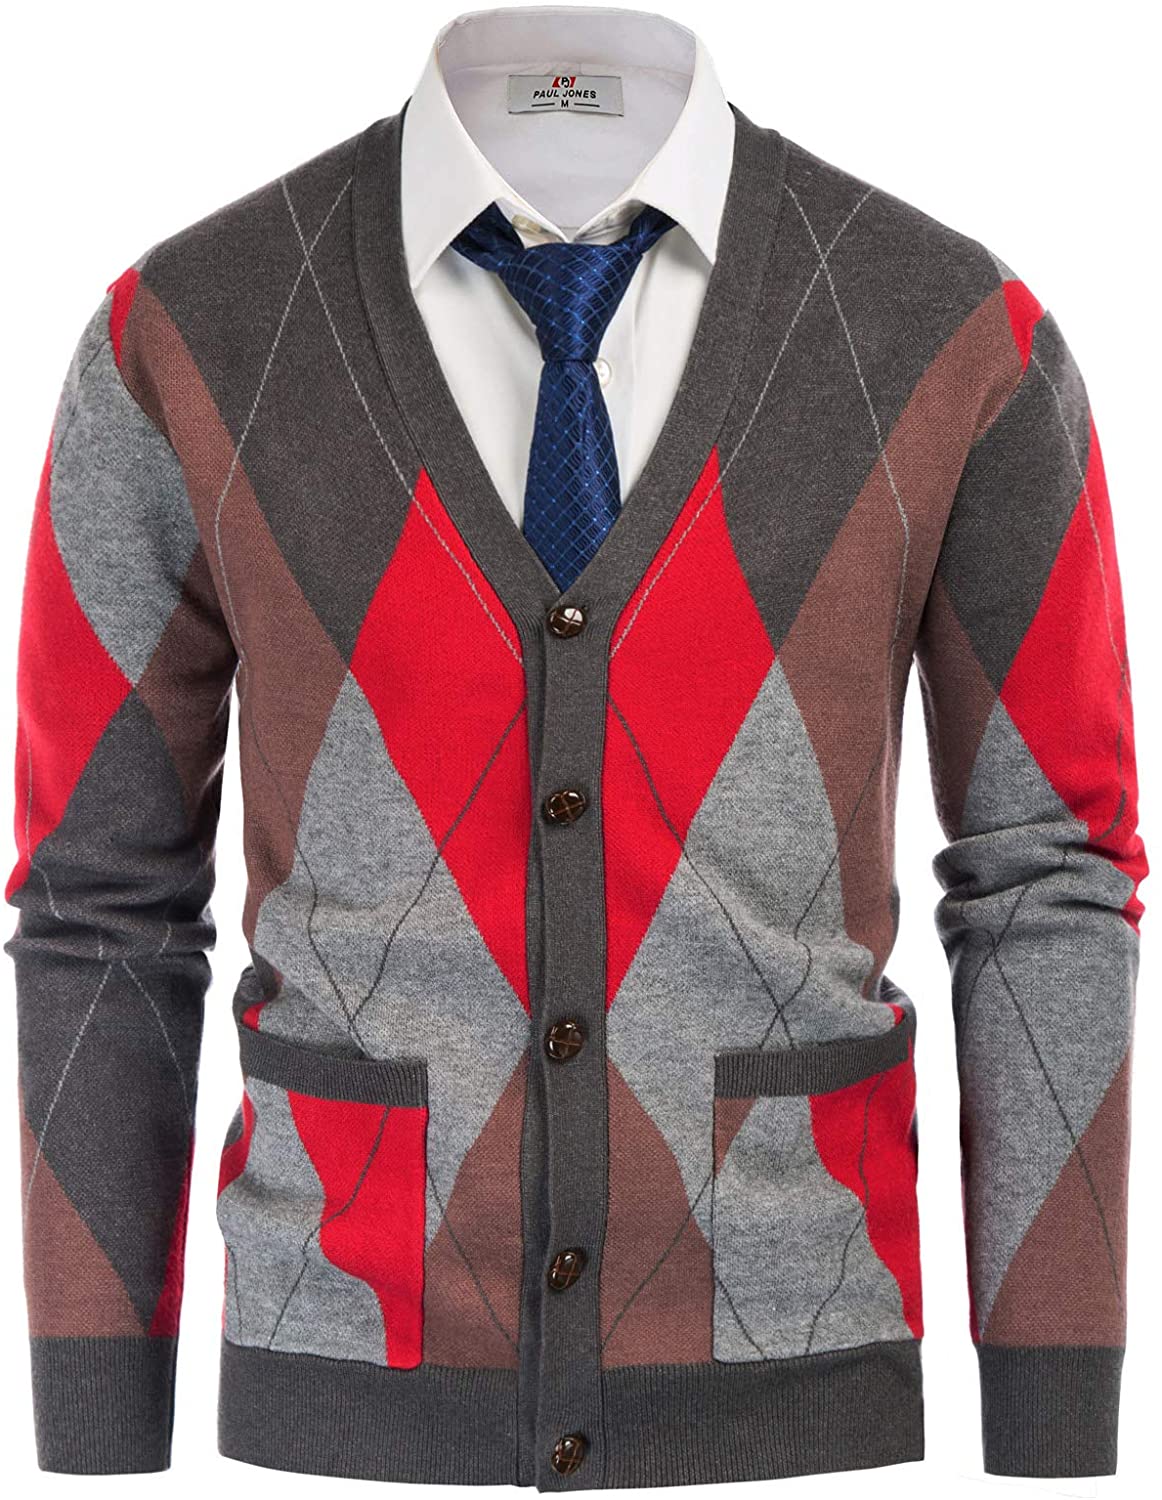 PJ PAUL JONES Mens V Neck Argyle Cardigan Sweater Contrast Knitwear with Pockets 